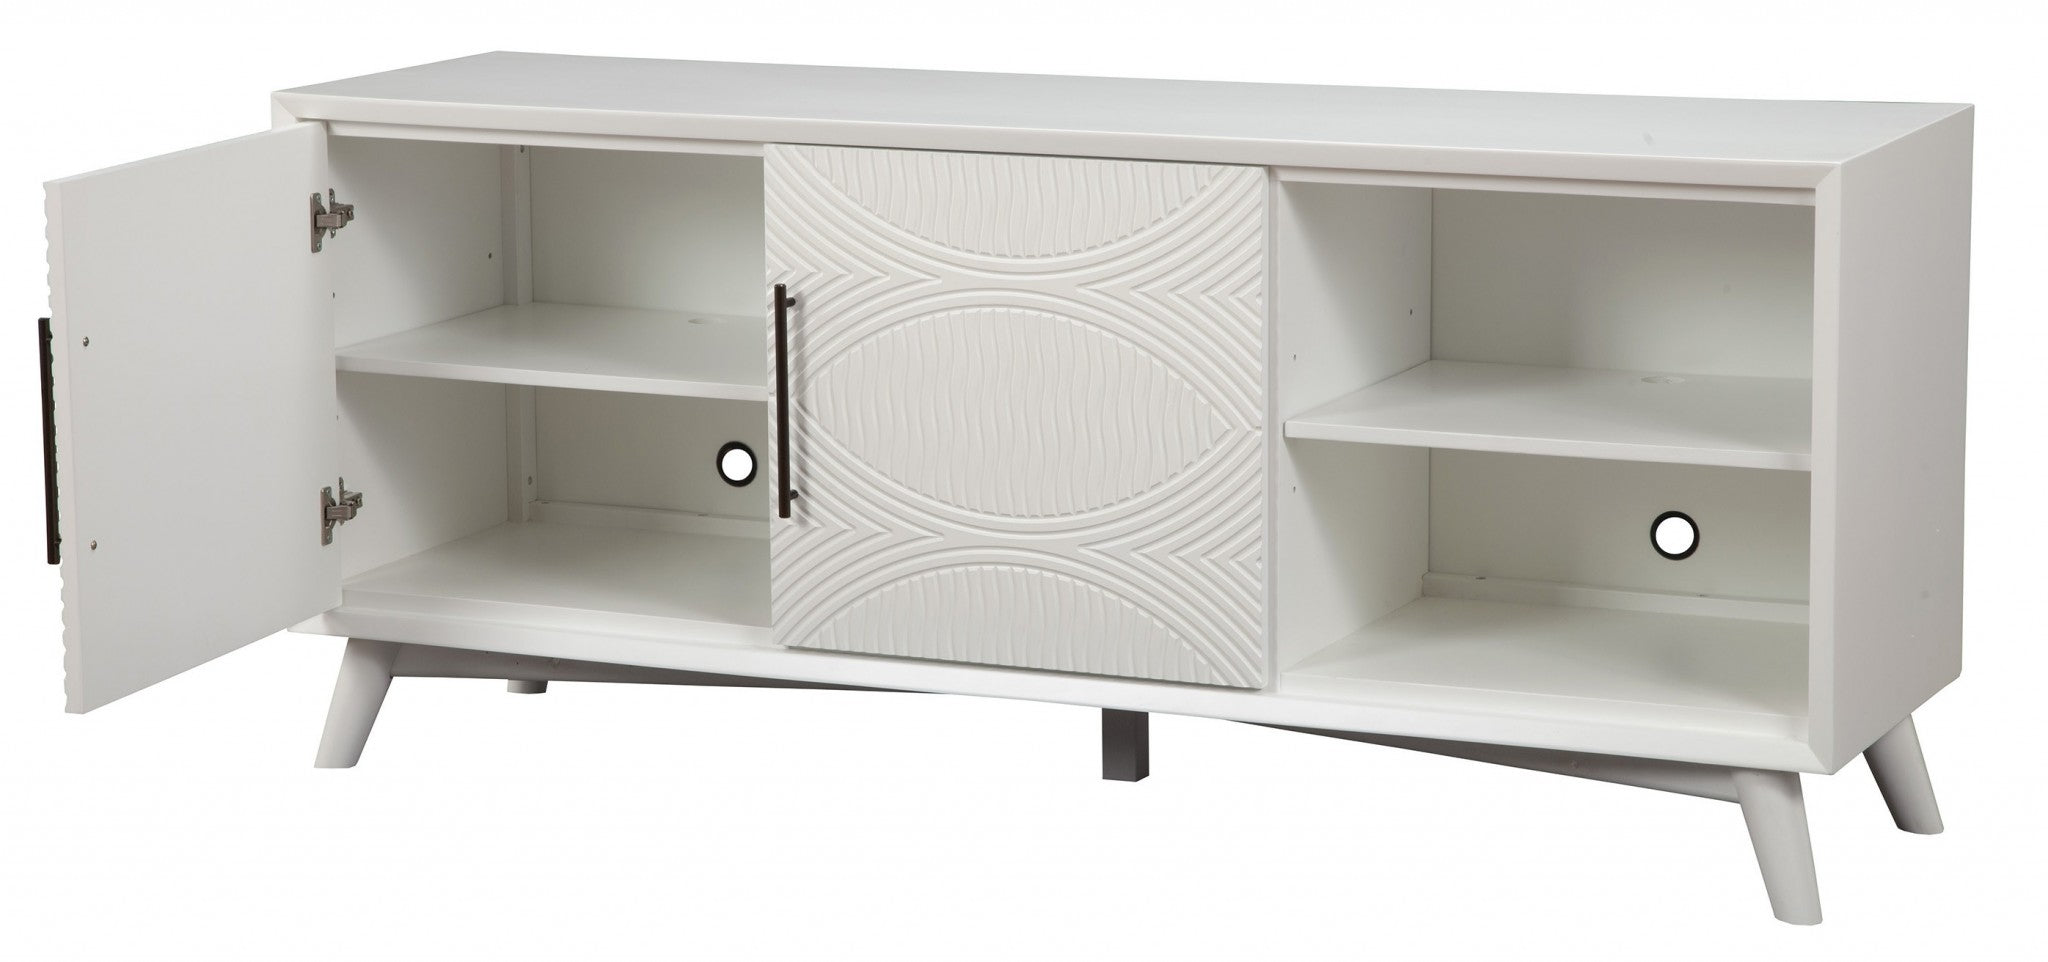 64" White Mahogany Solids & Veneer Open shelving TV Stand